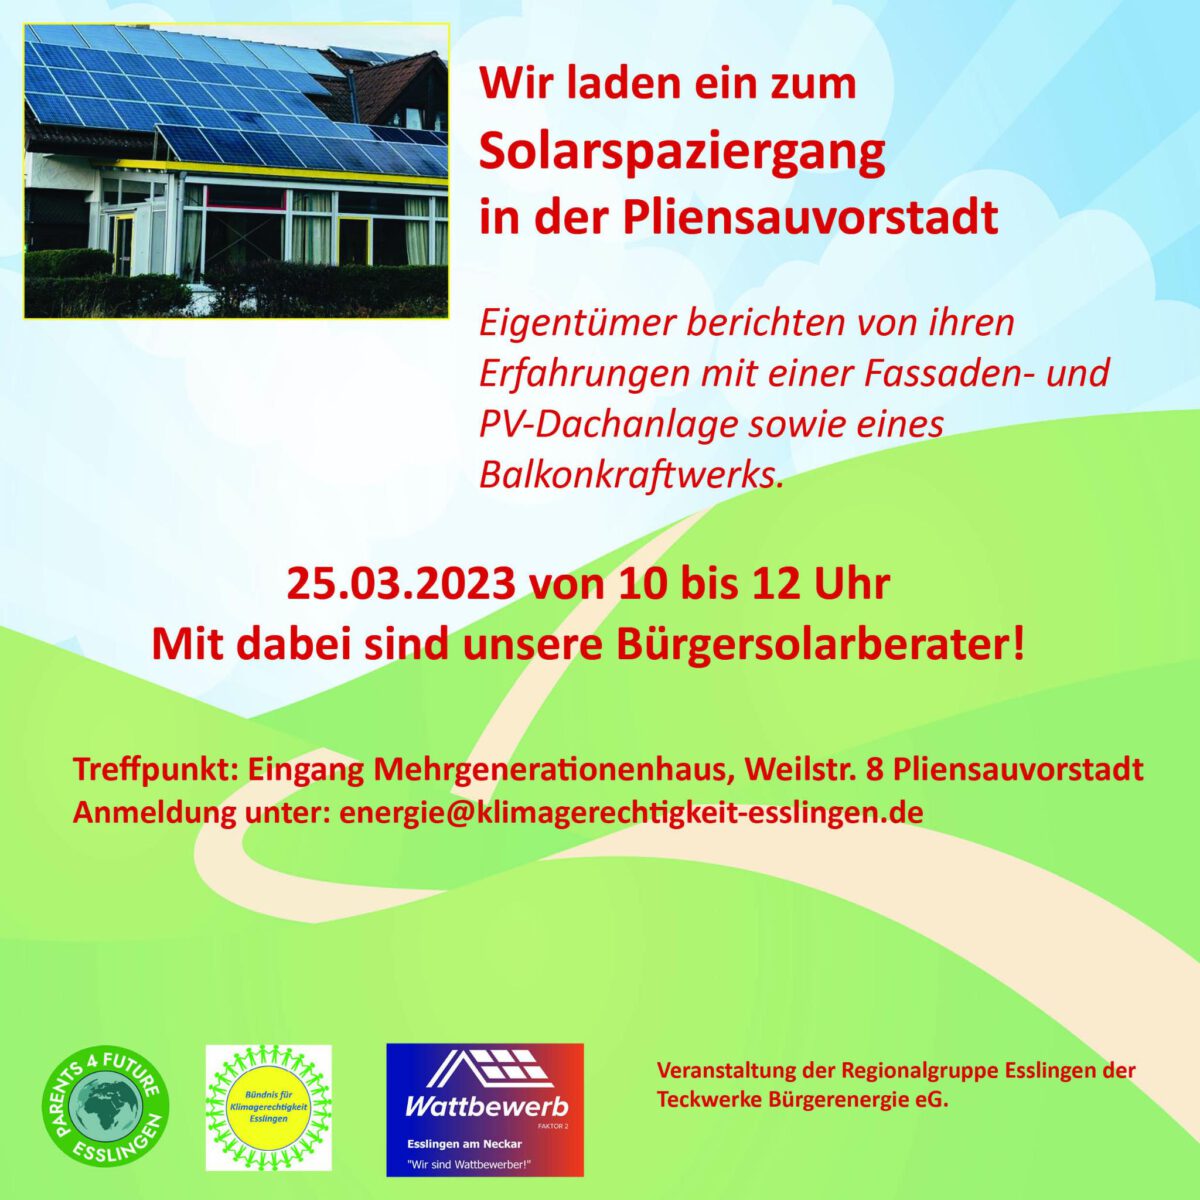 Solarspaziergang Pliensauvorstadt am Samstag 25.3. 10-12 Uhr